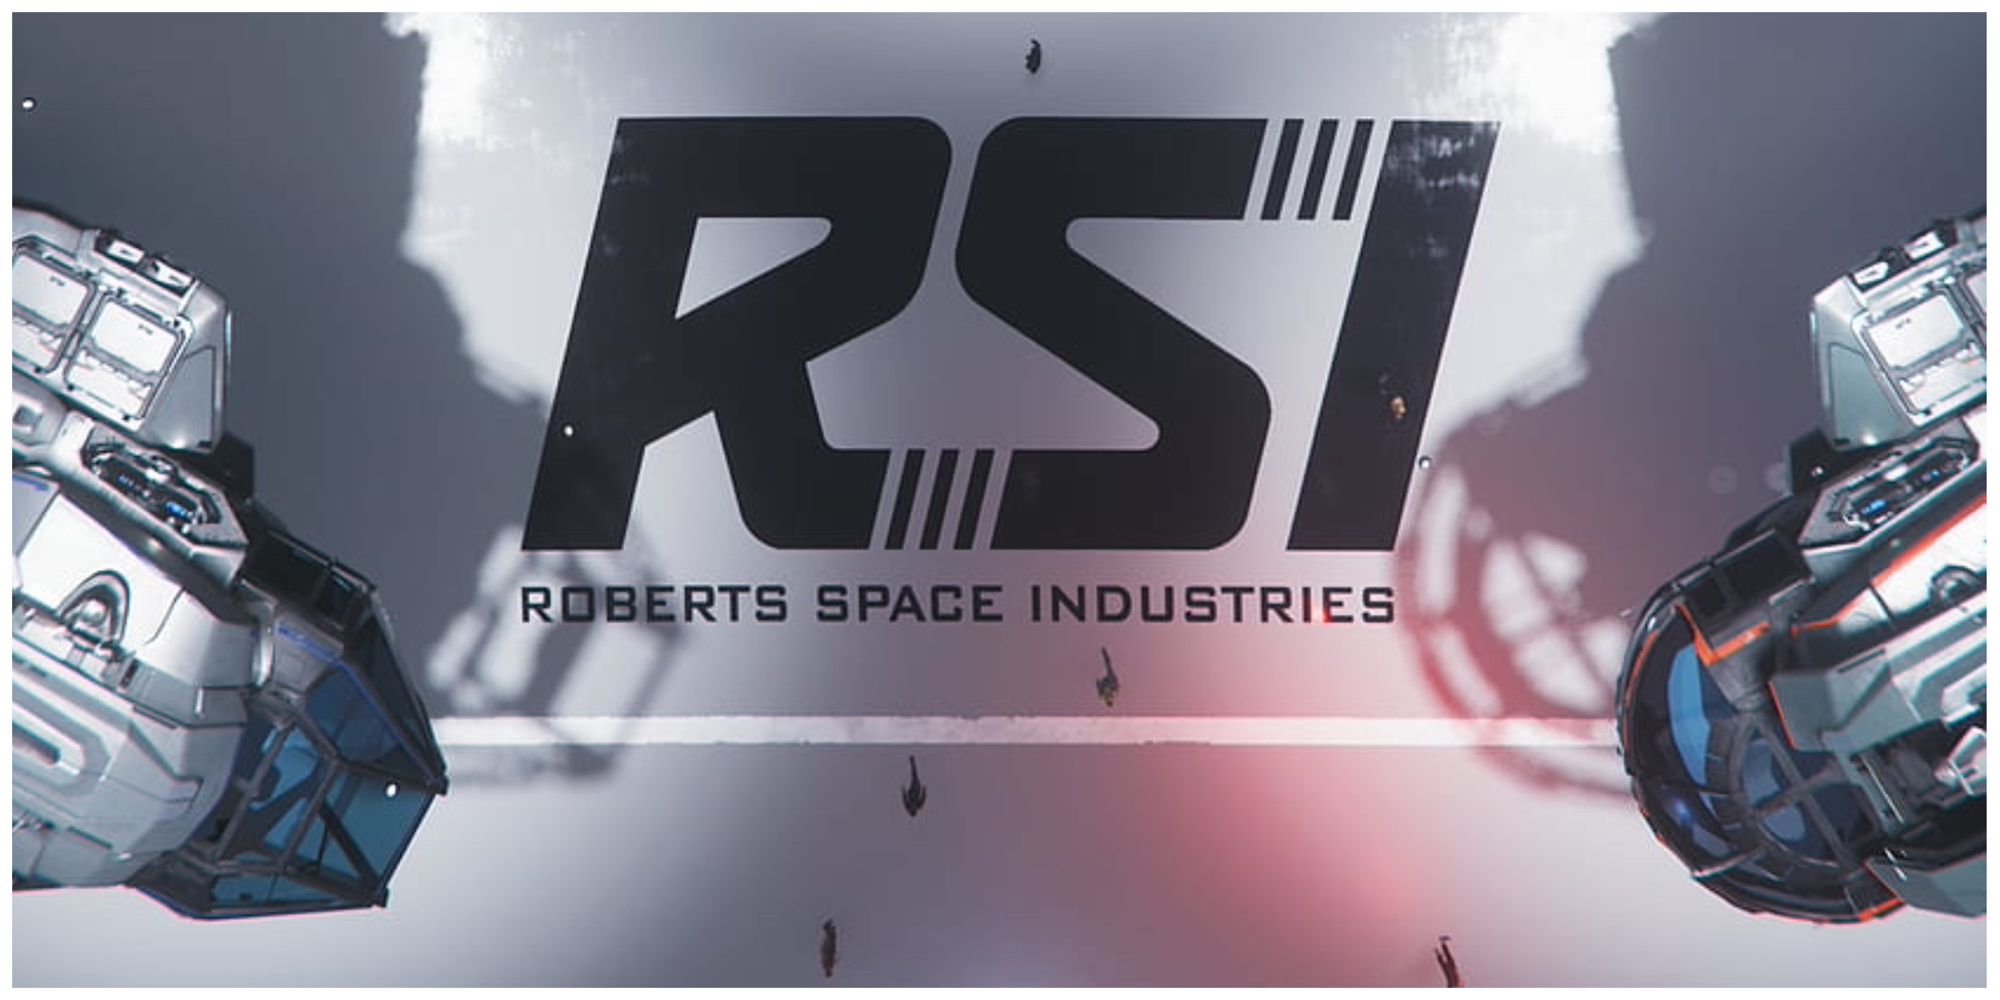 Star Citizen: Best RSI Ships